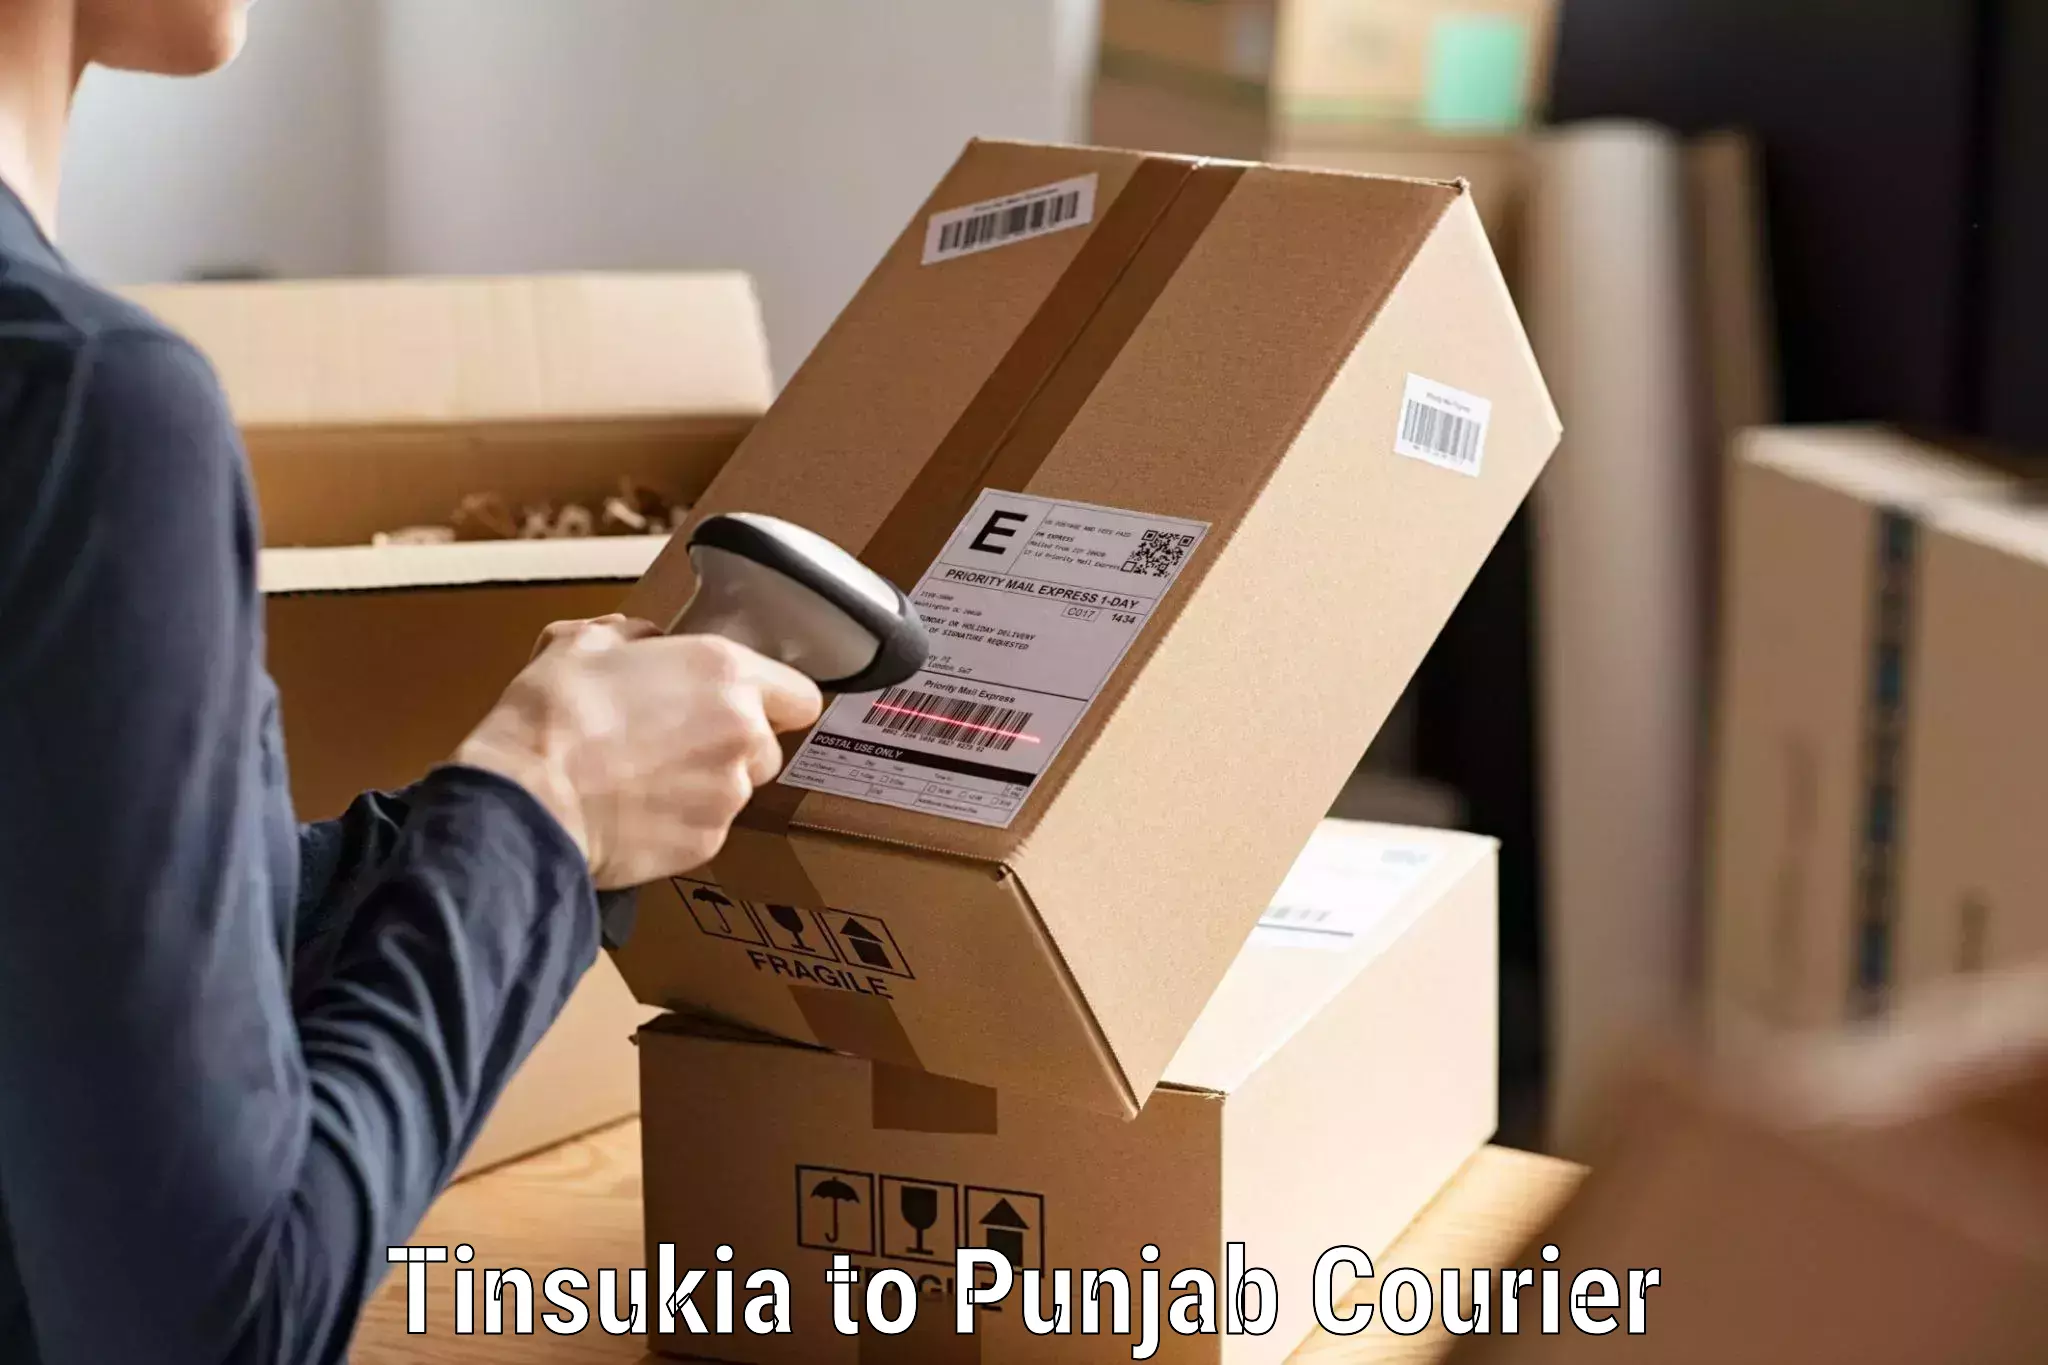 Secure packaging in Tinsukia to Faridkot